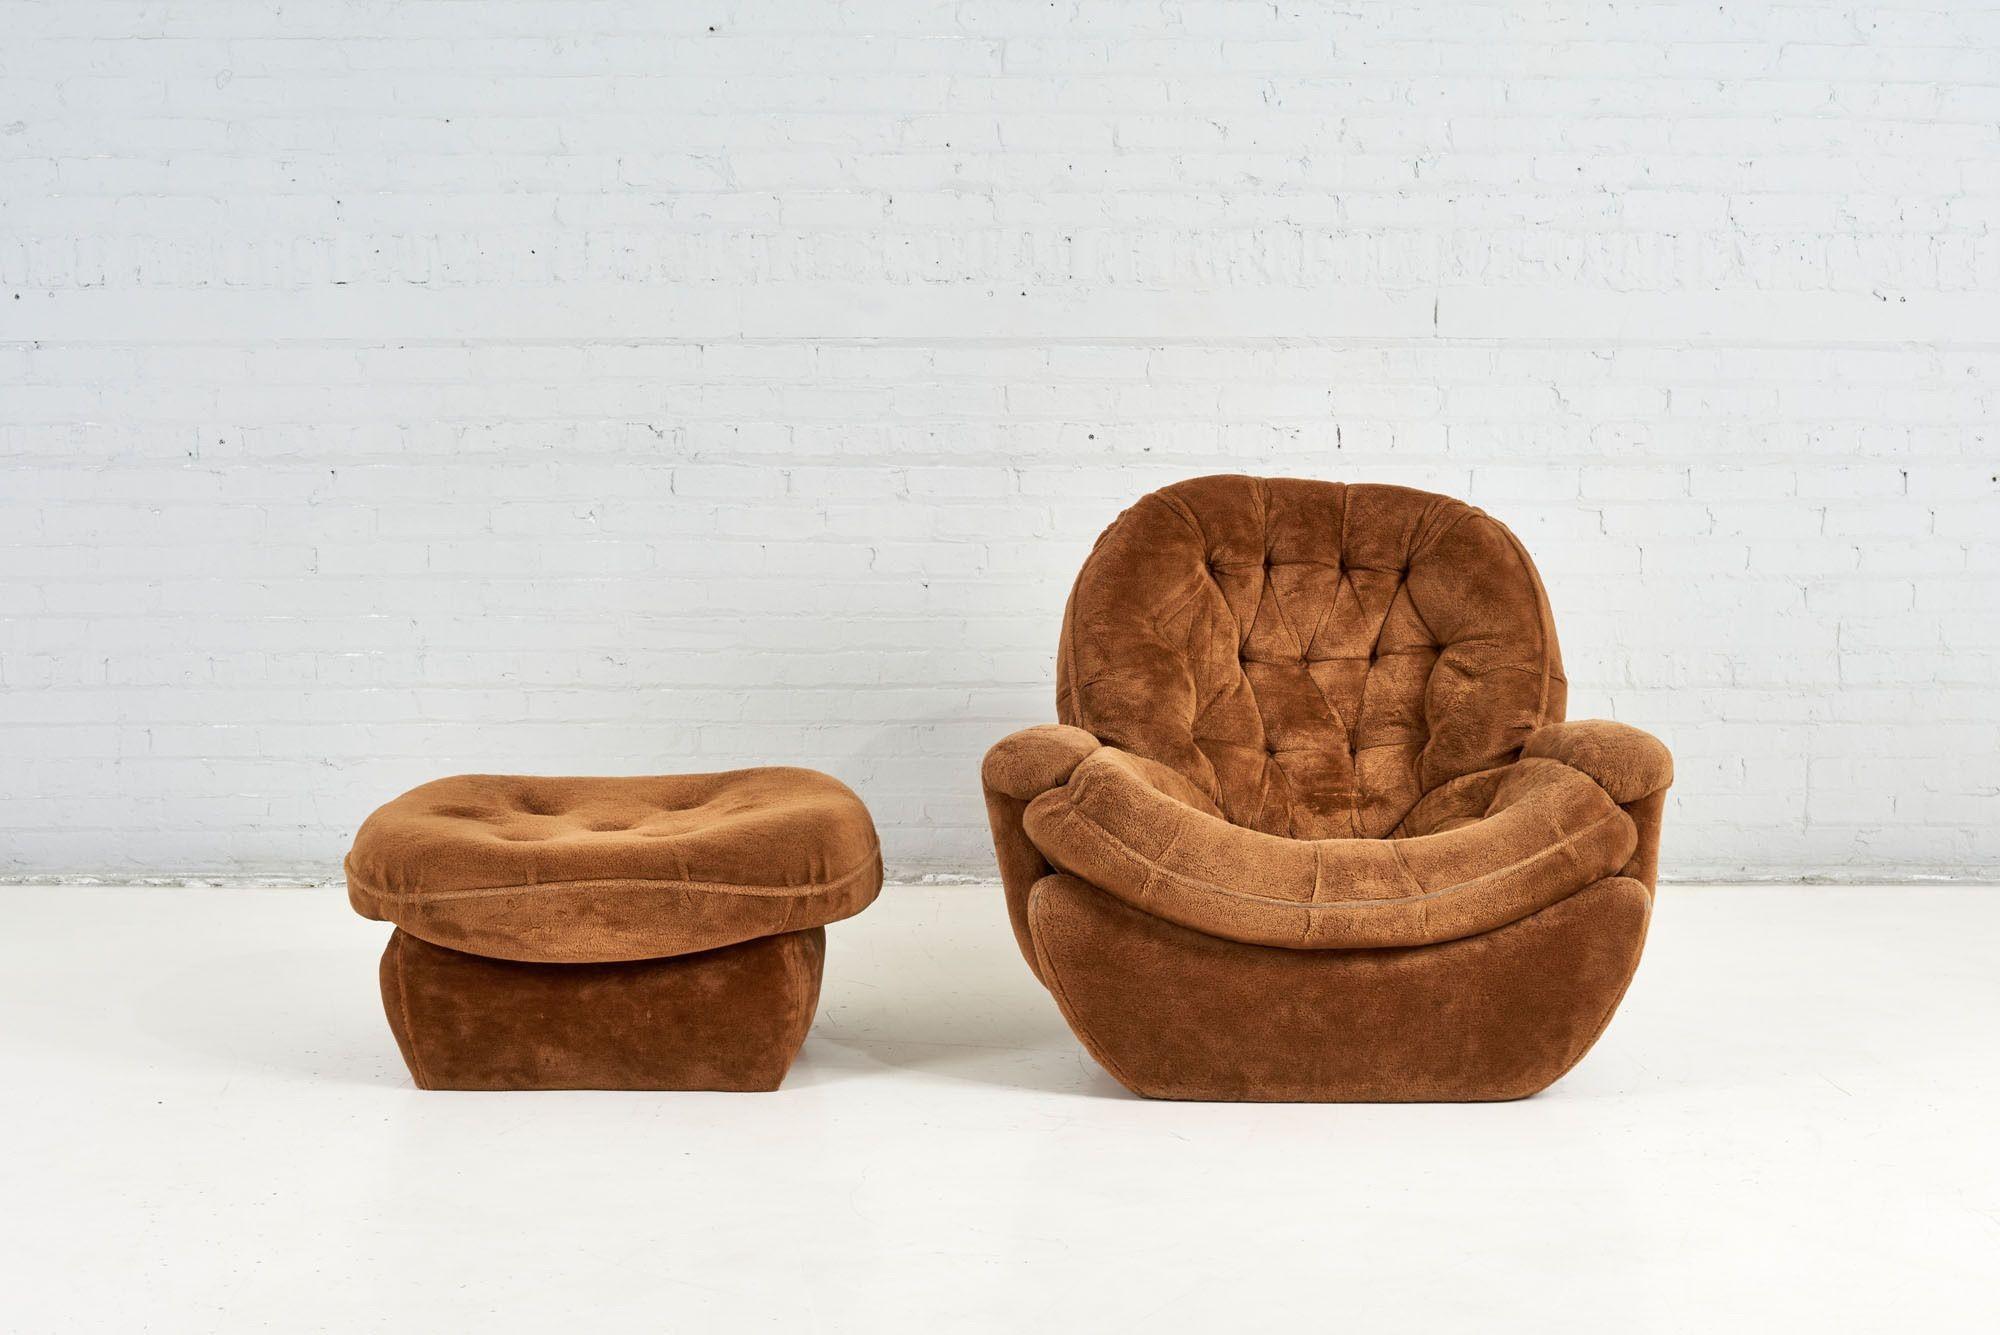 Plush 1970's lounge chair and ottoman 1970 original 70's upholstery. Ottoman measures 32